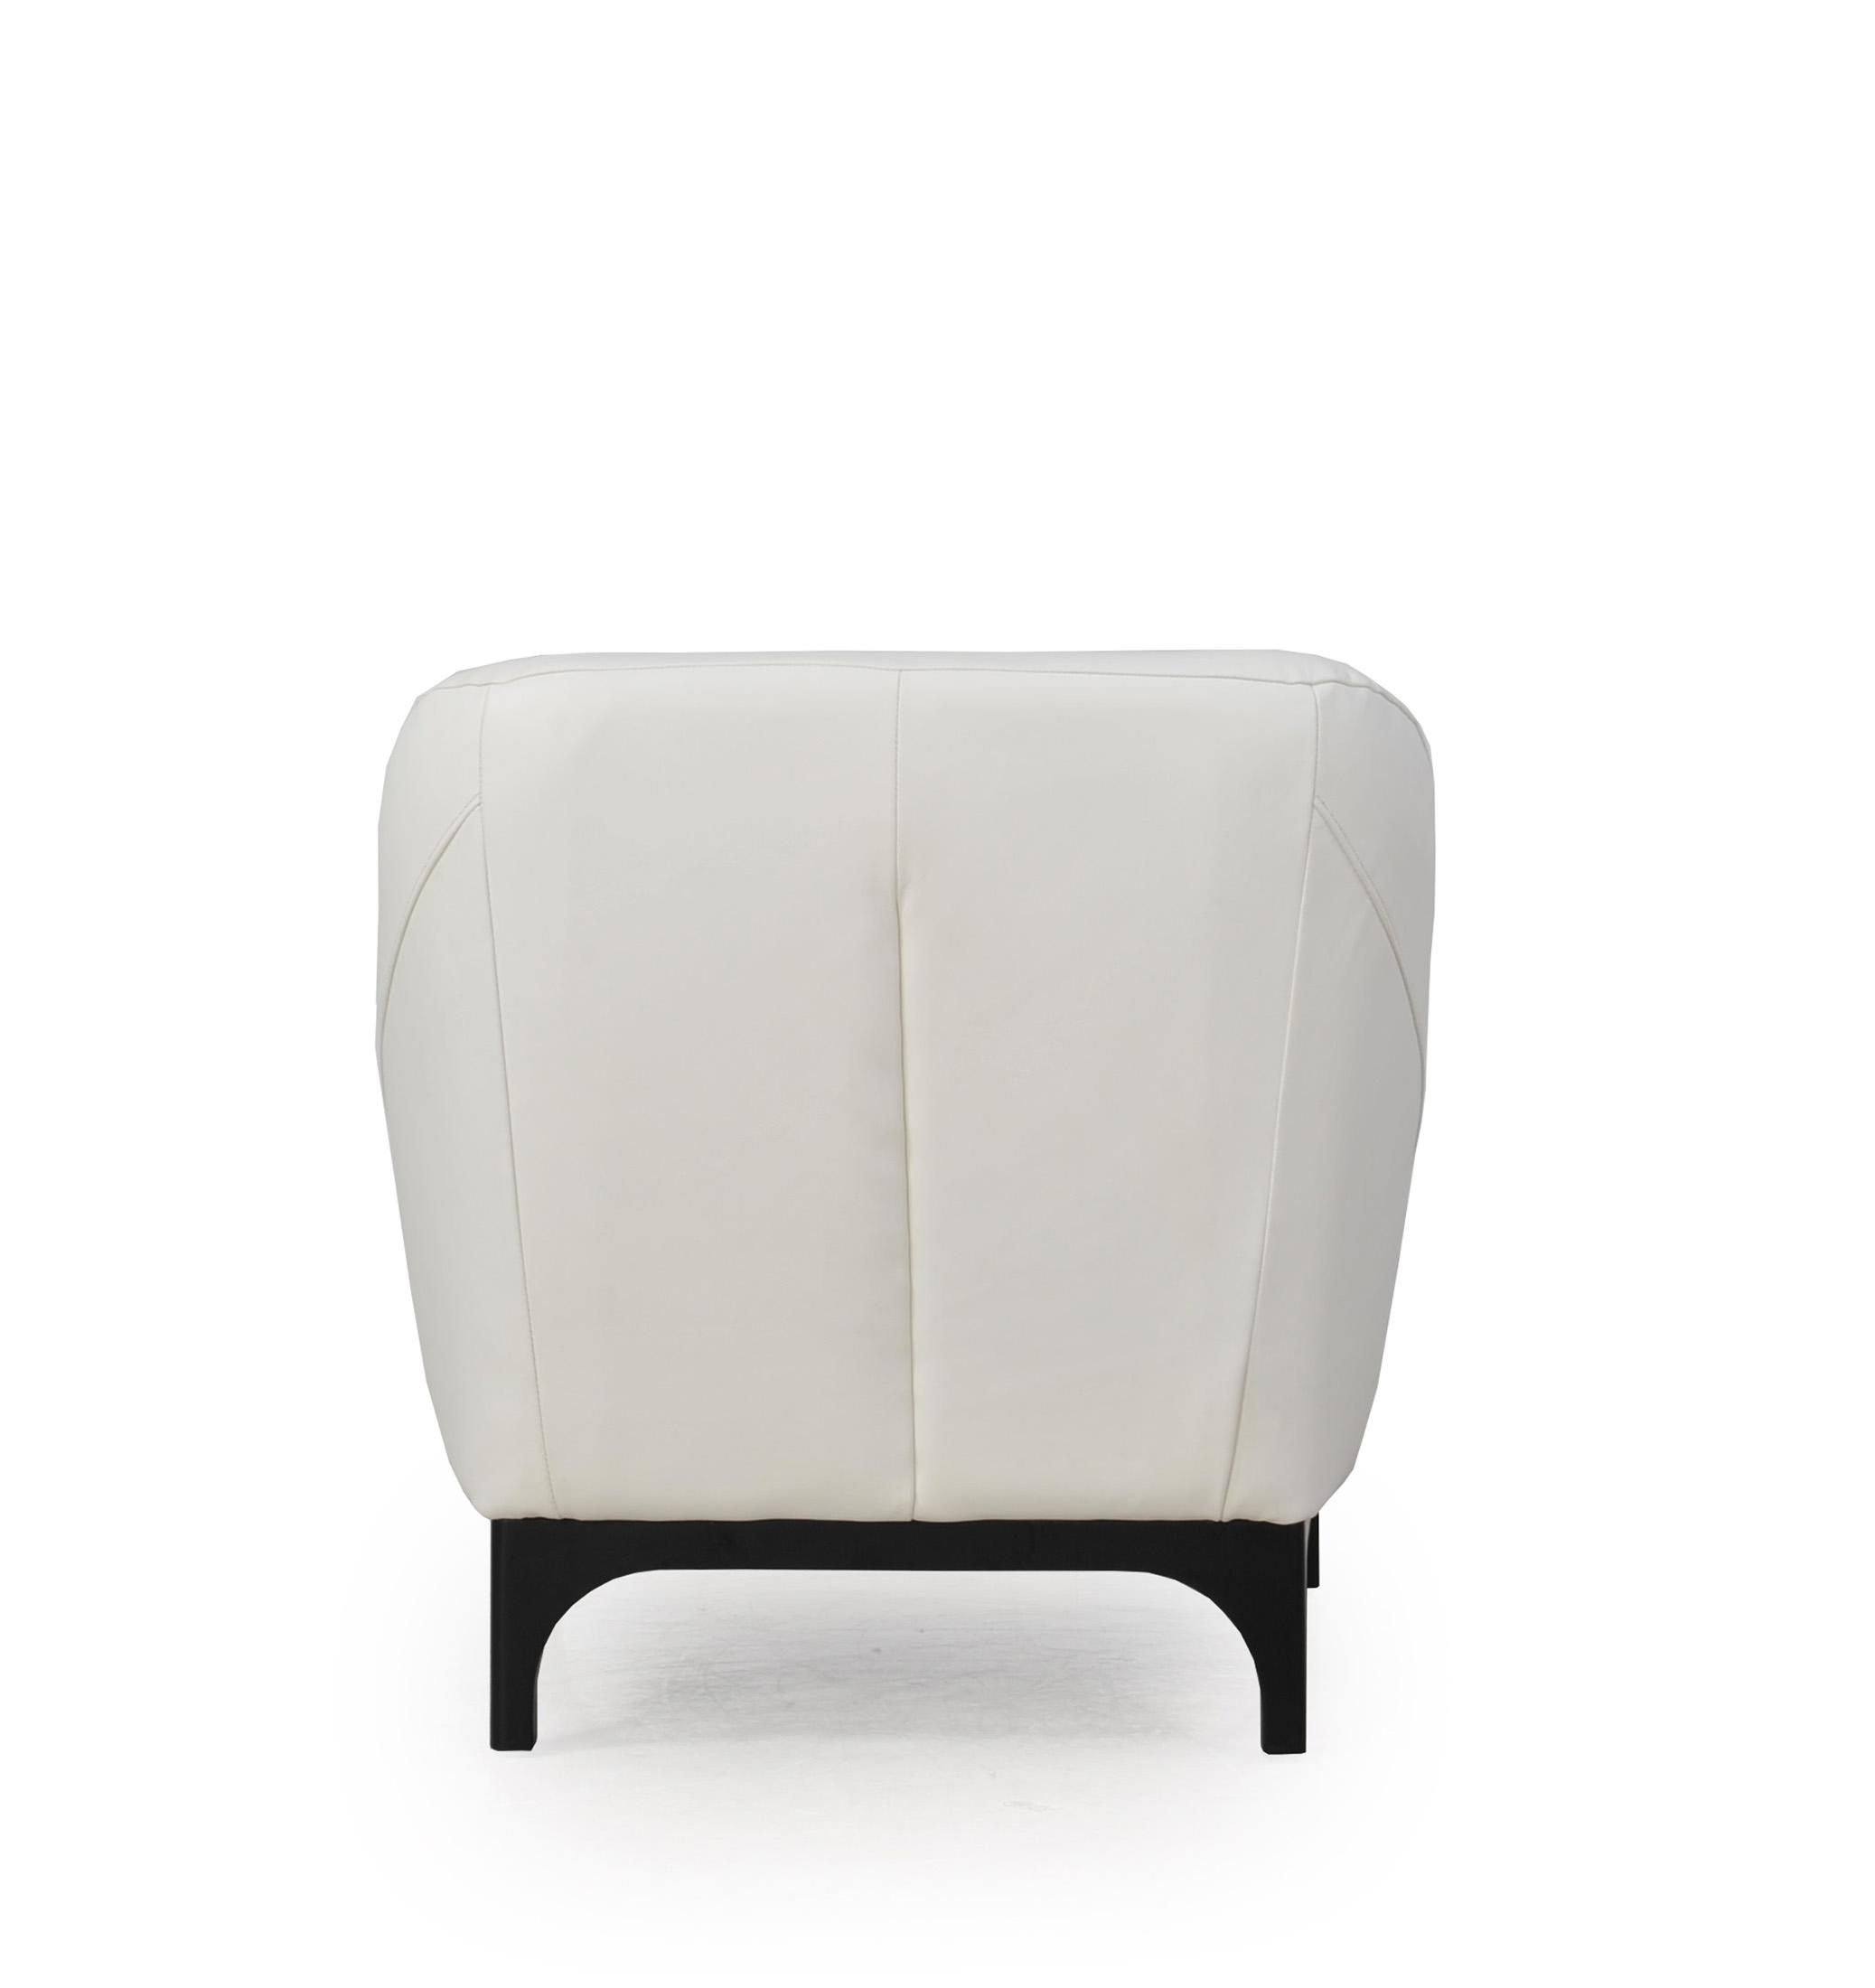 

    
Wollo 357-Set-2 White Top Grain Leather Upholstery Mid-Century Sofa Chair Set 2Pcs Moroni Wollo 357
